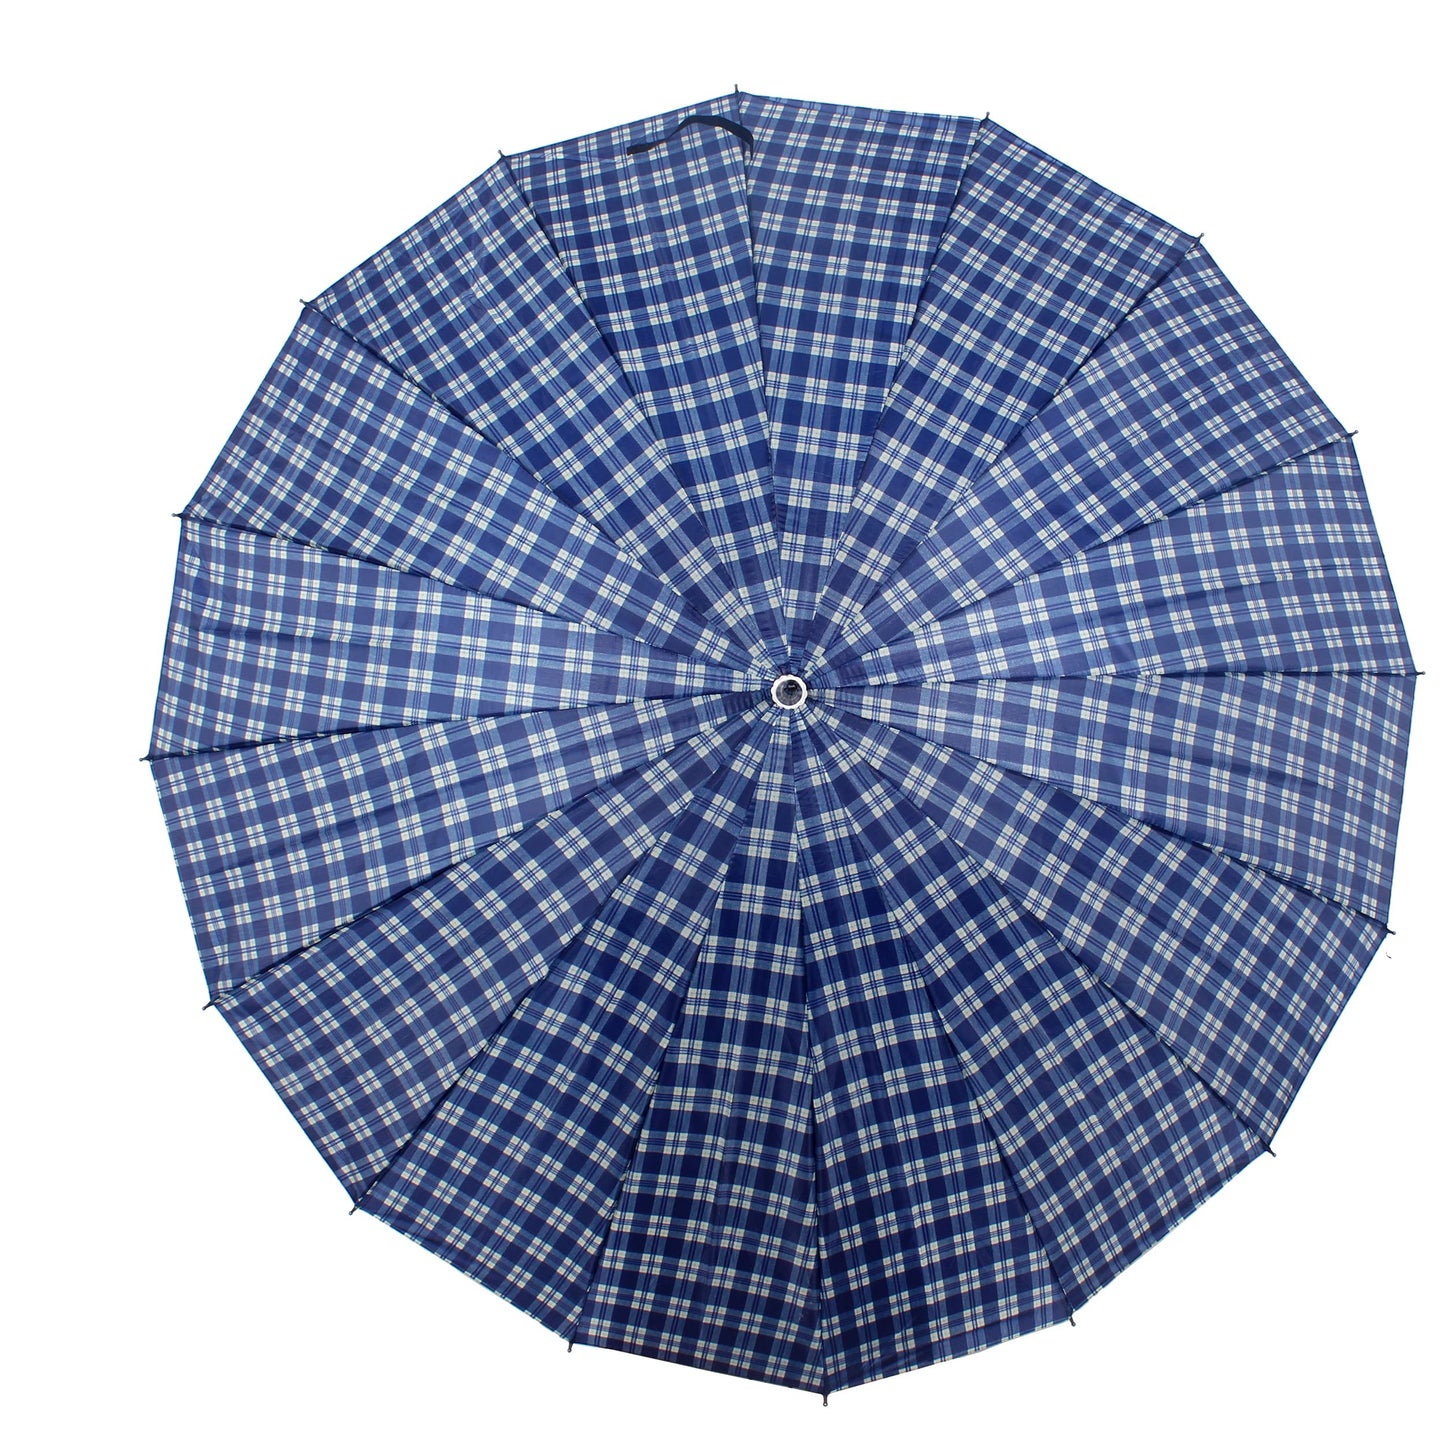 THE CLOWNFISH Umbrella Single Fold Manual Open Waterproof Polyester Umbrellas For Men and Women (Checks Design- Blue)